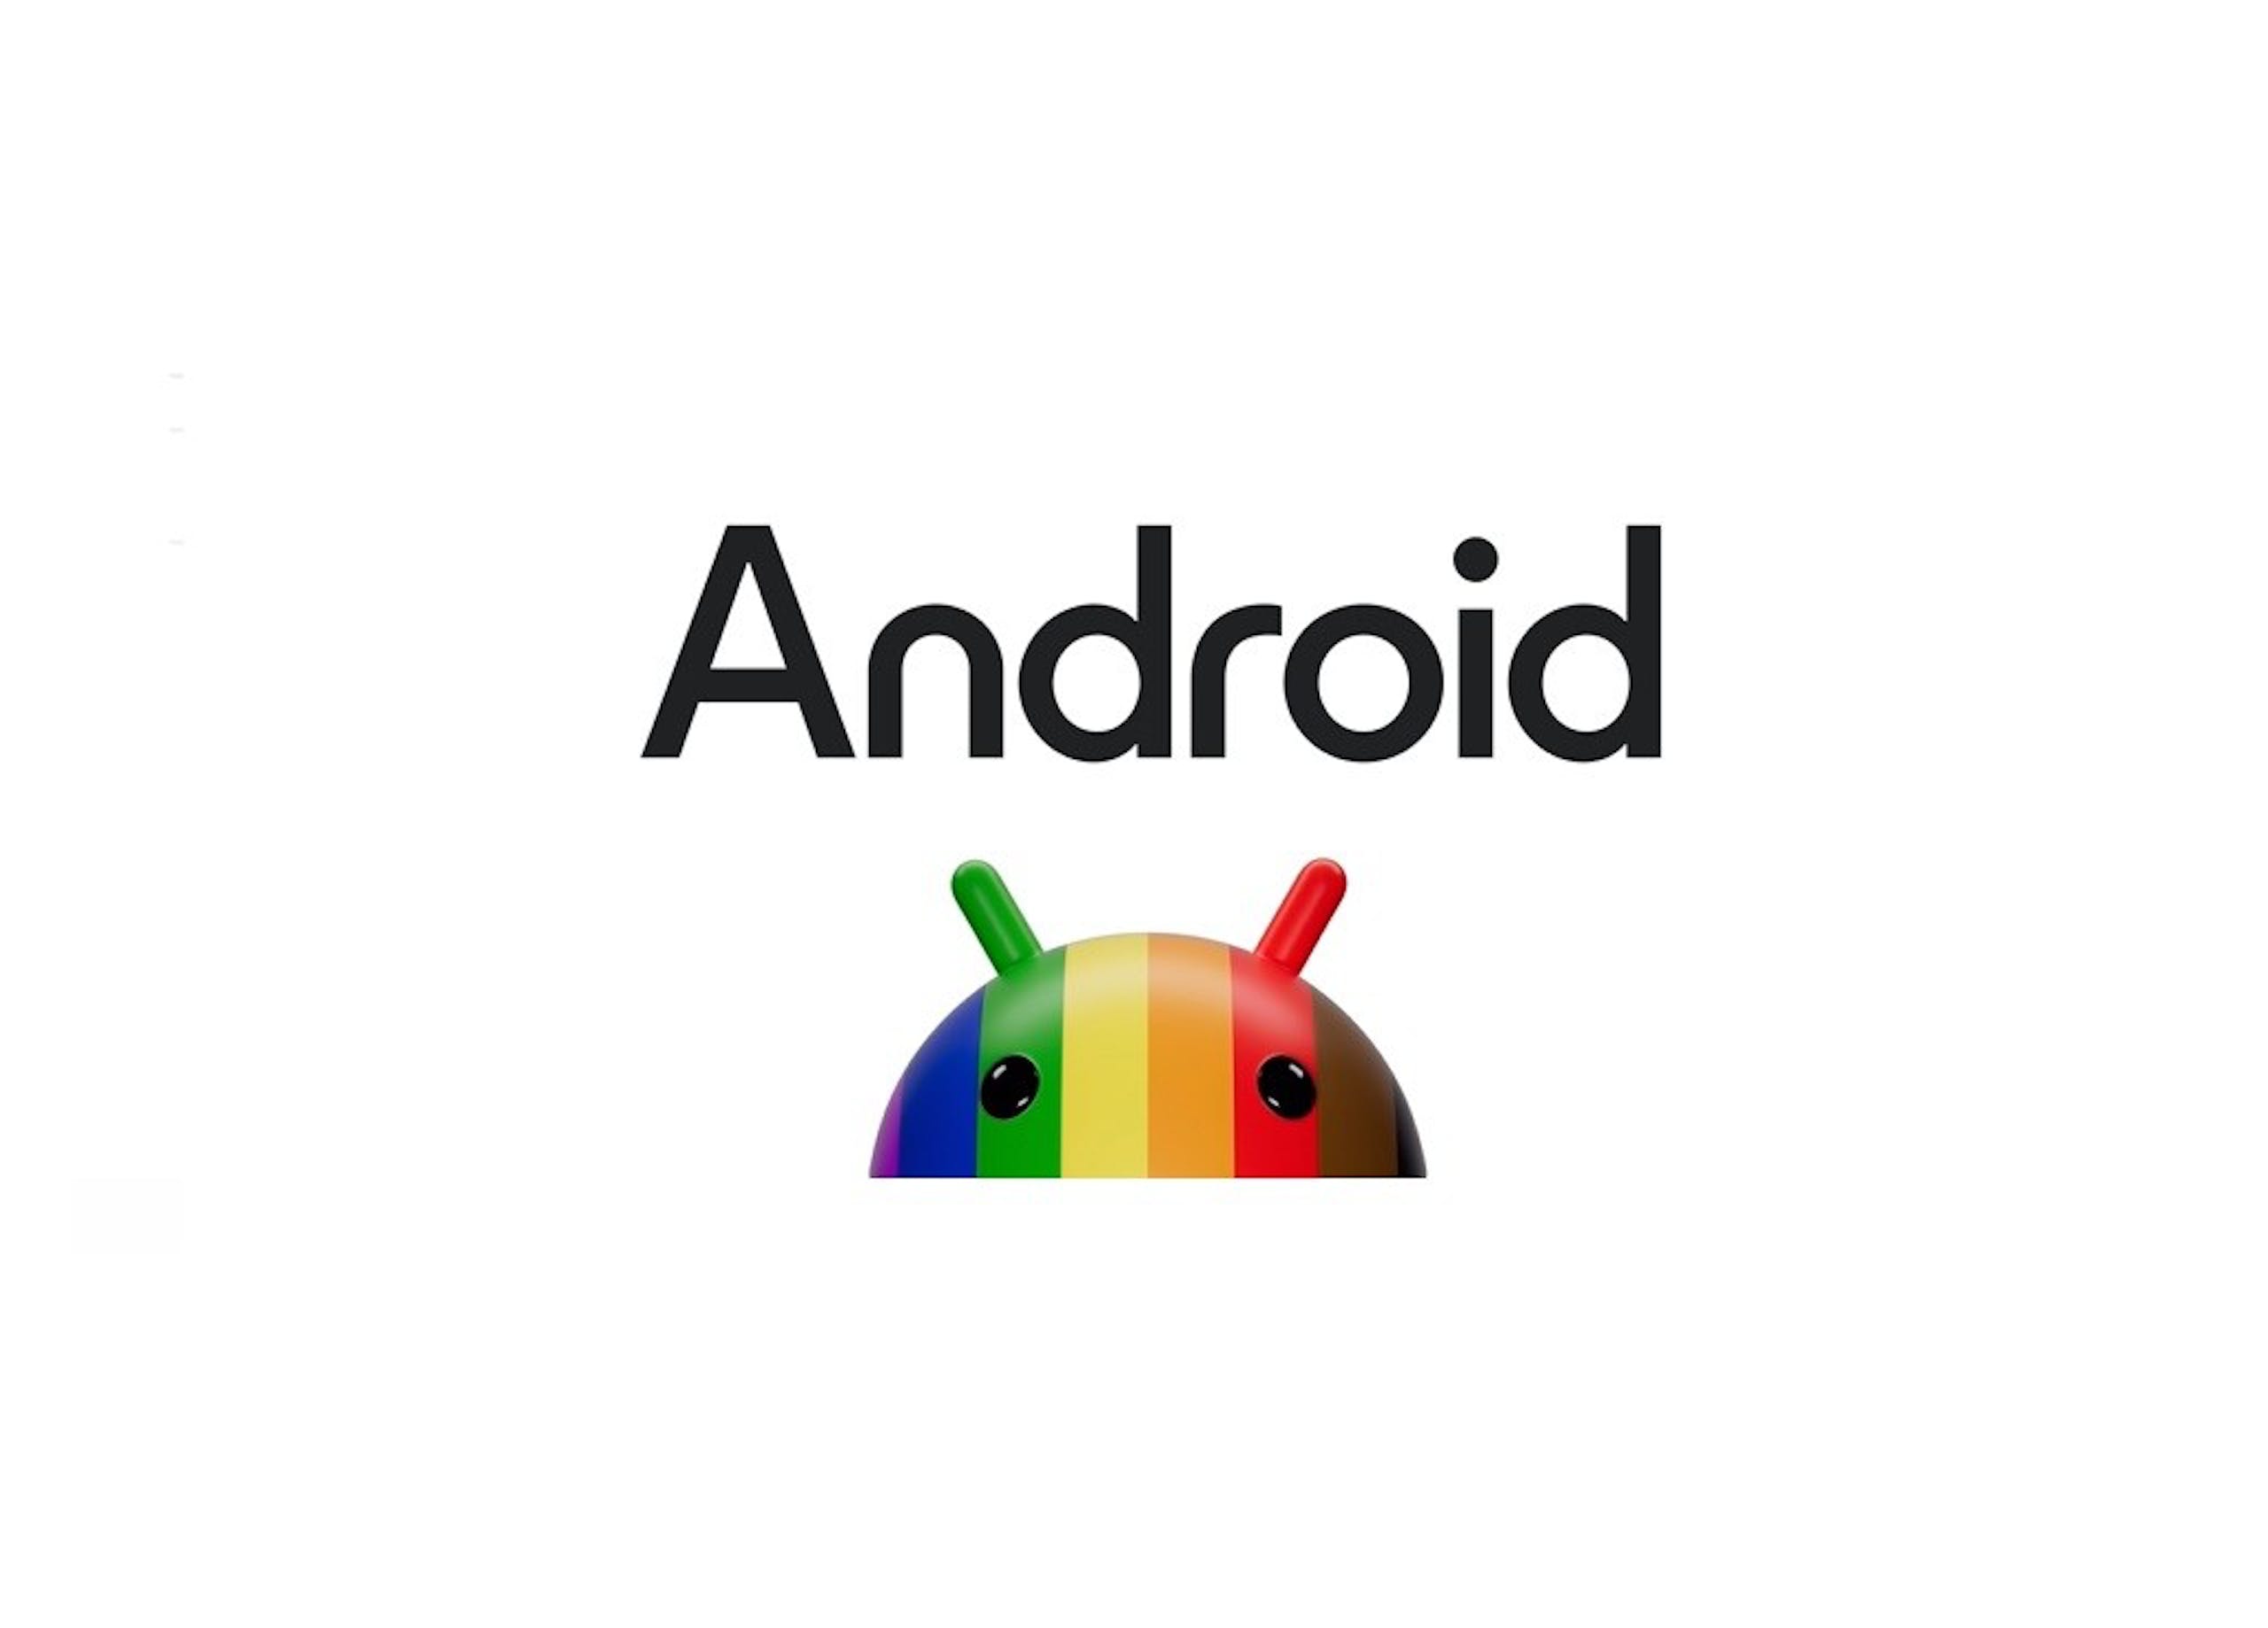 Android 将 Bugdroid 小绿人换上 Material Design 的 3D 新外型，并将第一个 A 字改为大写增加与 Google 品牌链接